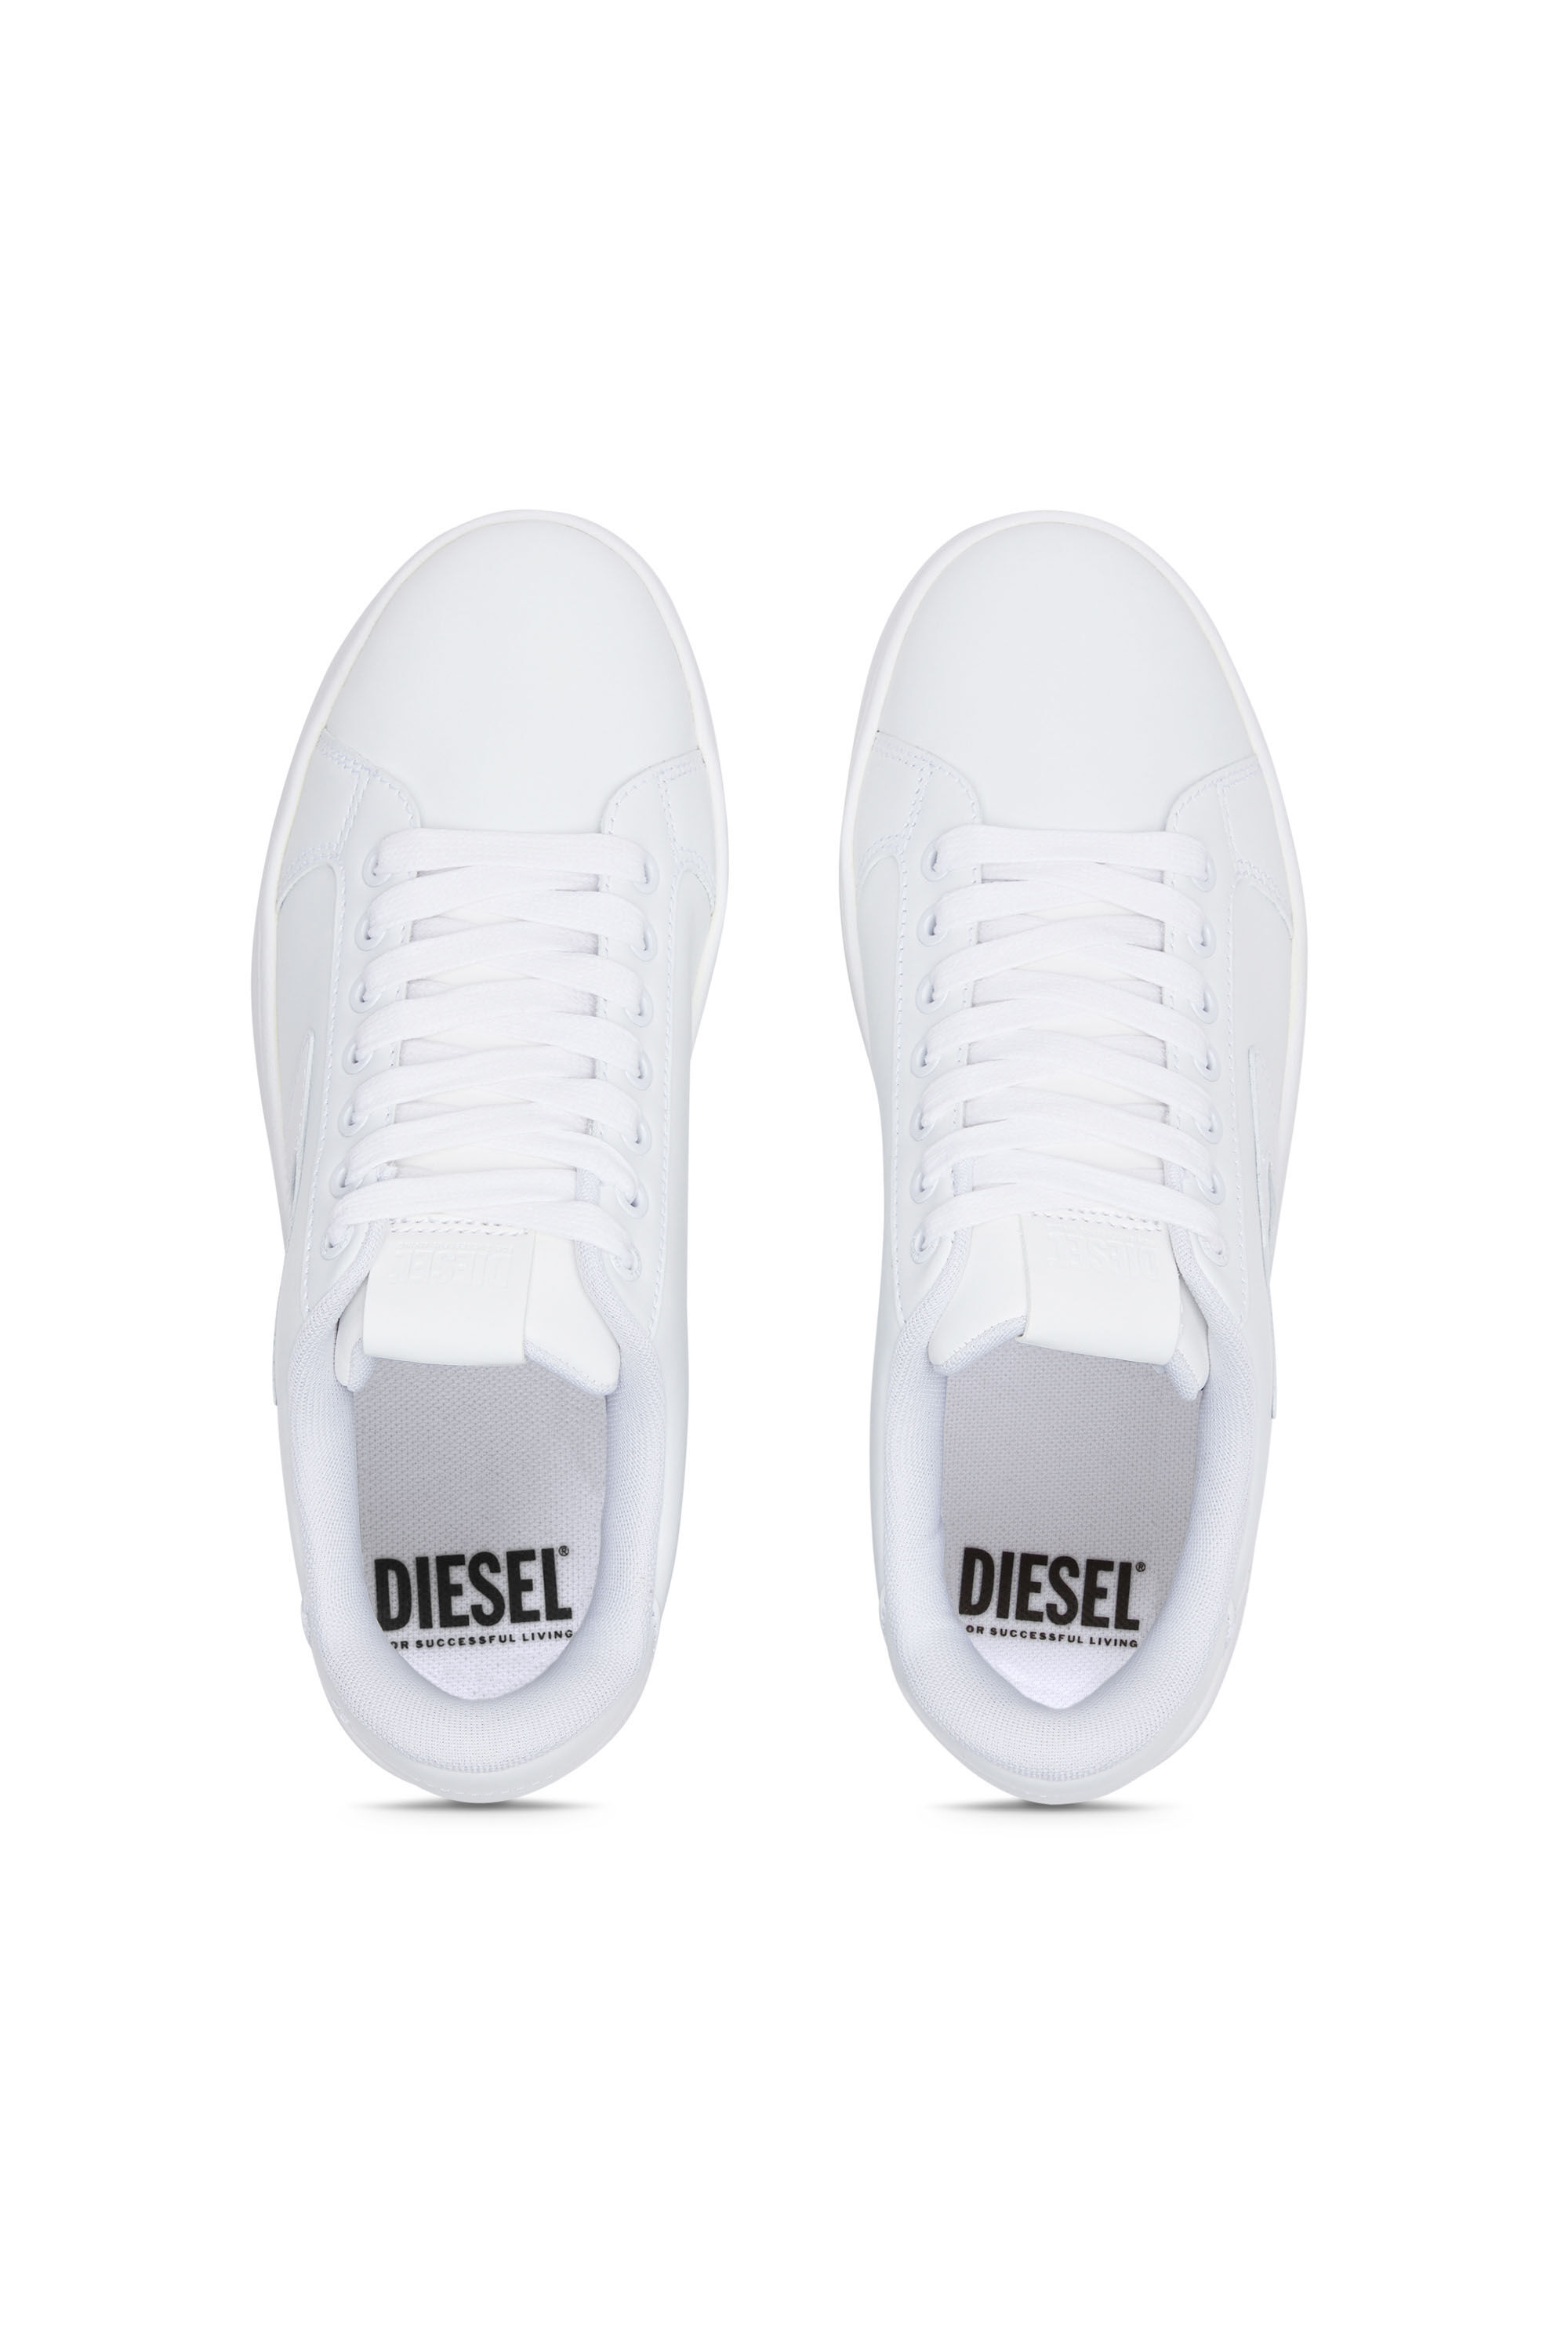 Diesel - S-ATHENE BOLD X, White - Image 4